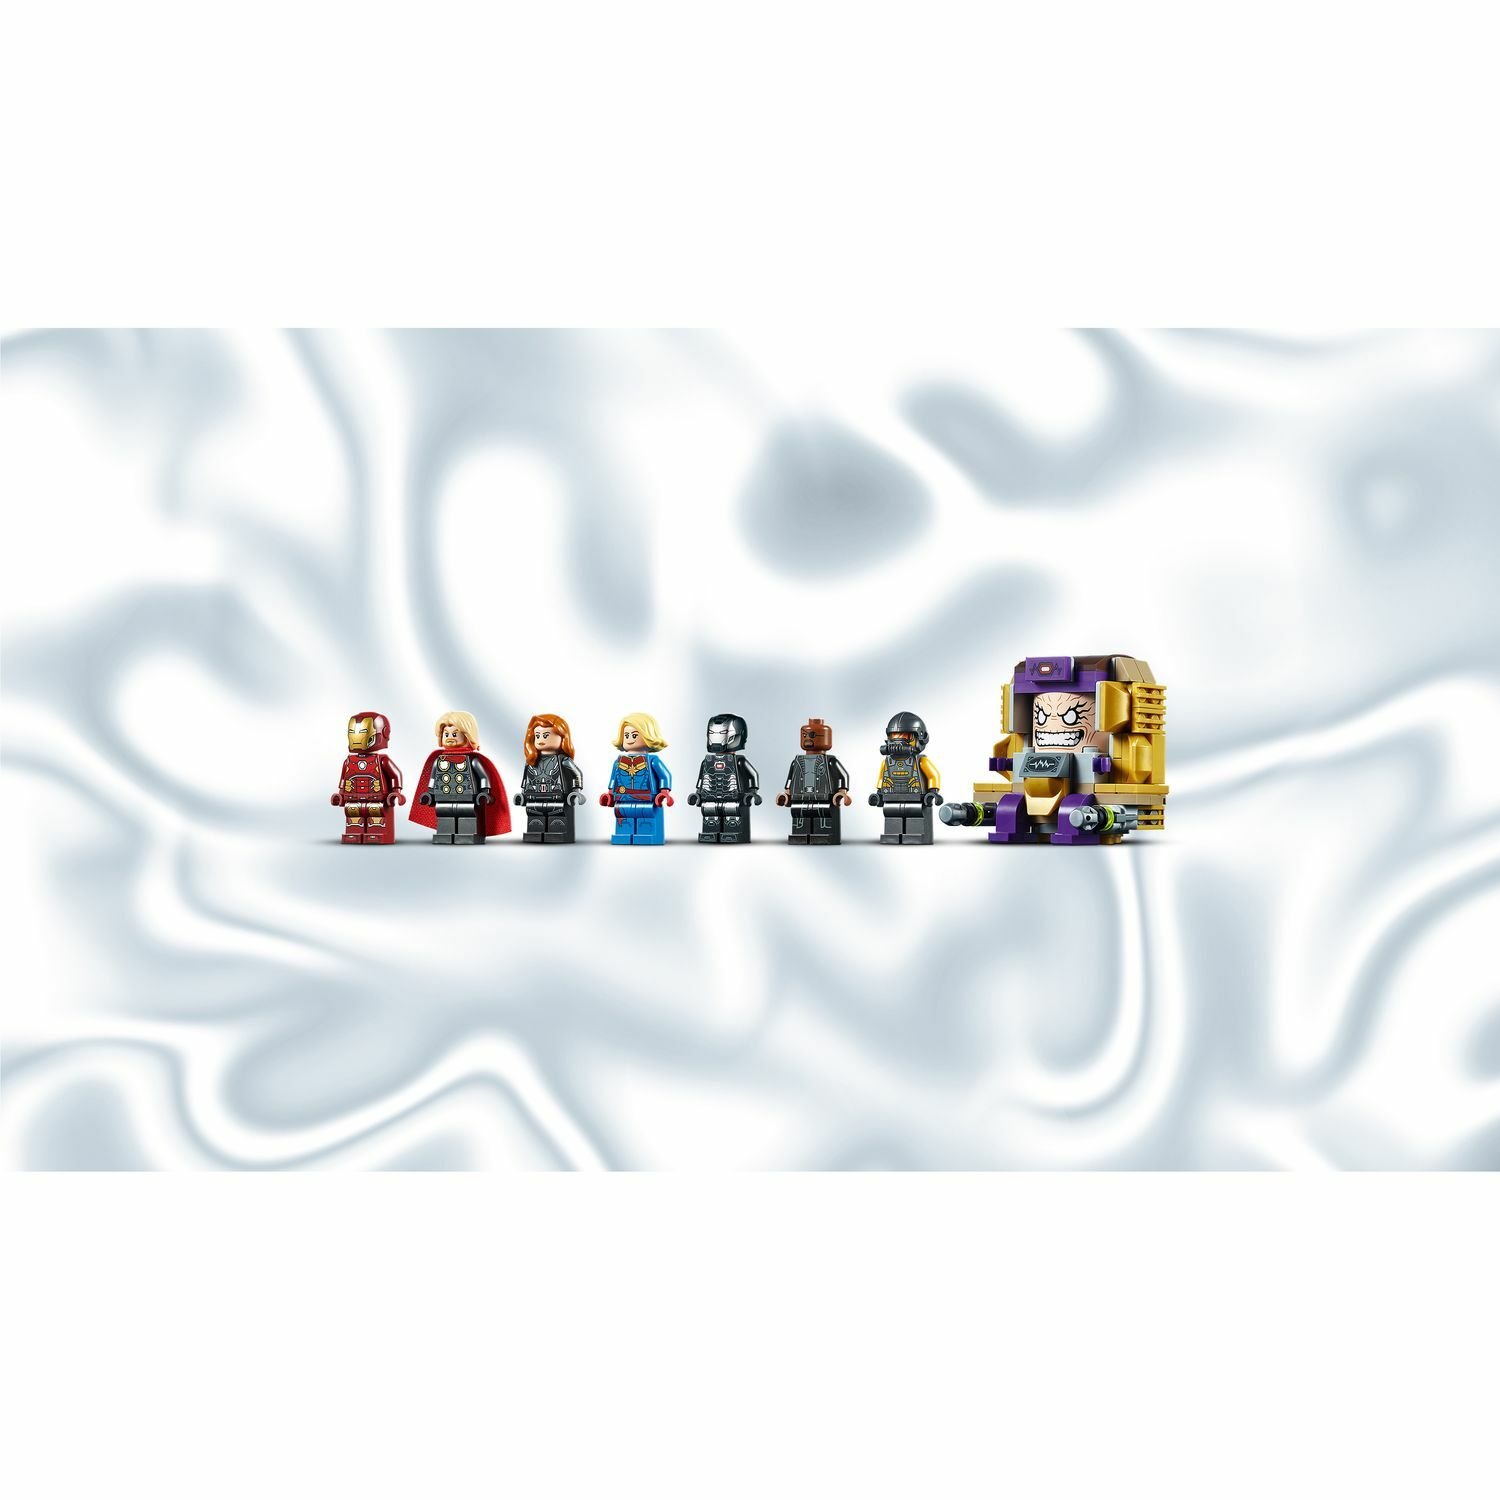 Конструктор LEGO Marvel Super Heroes 76153 Геликарриер